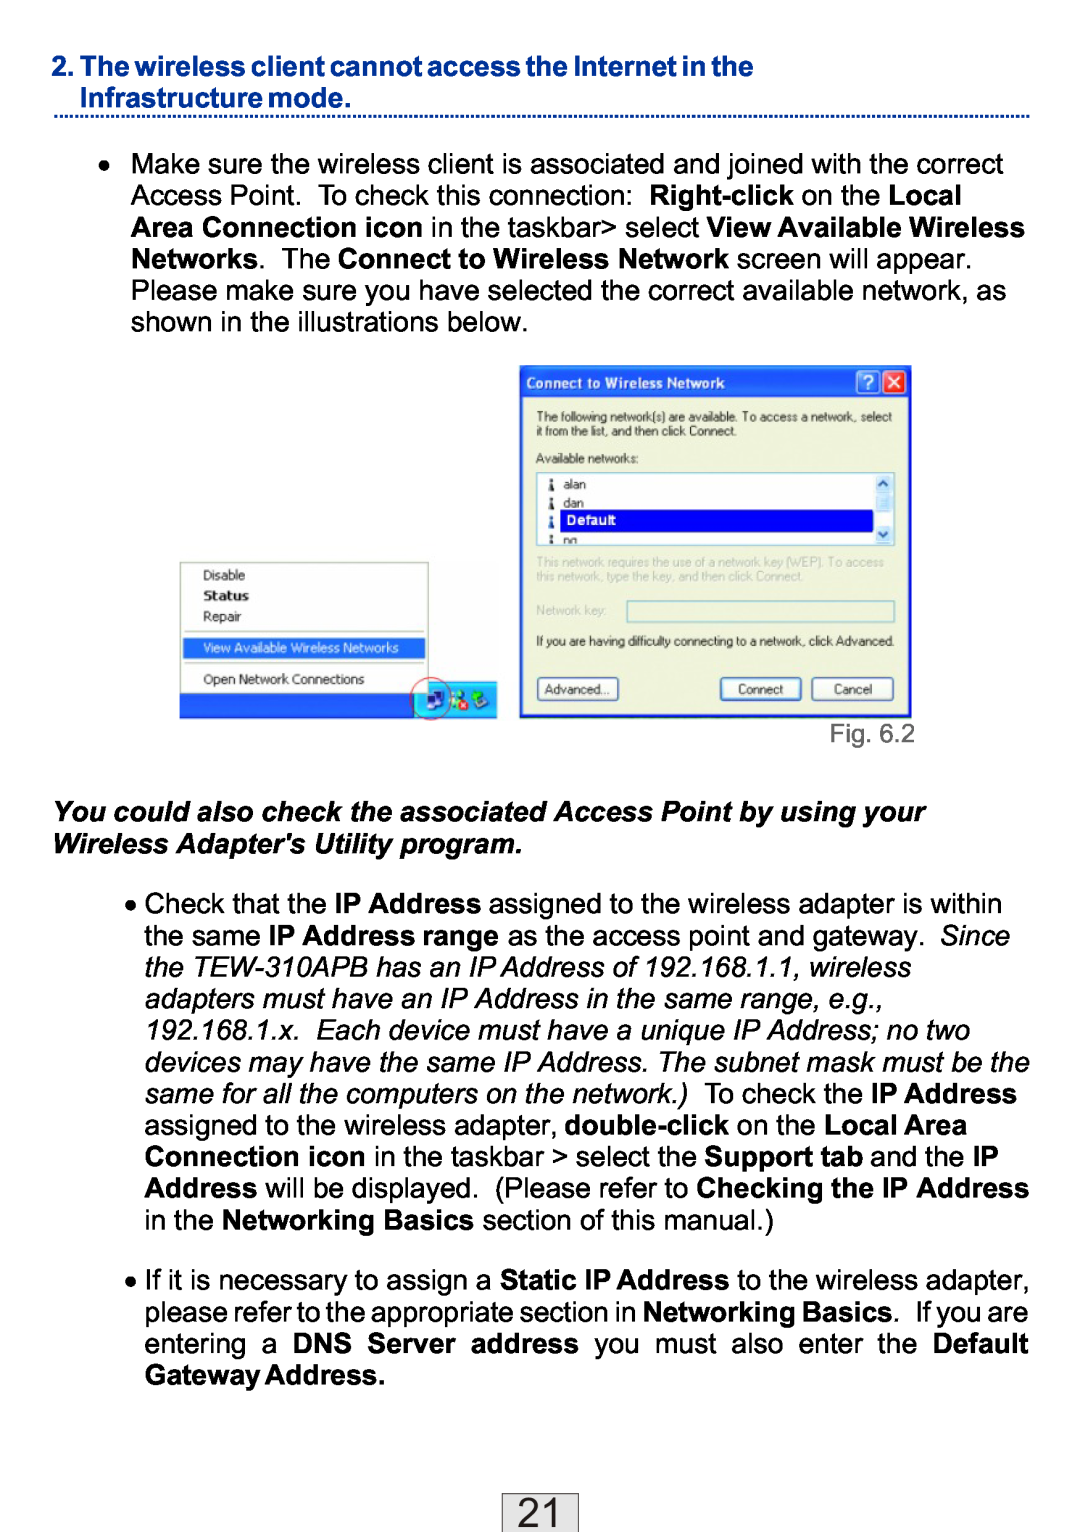 TRENDnet TEW-310APBX manual Gateway Address 